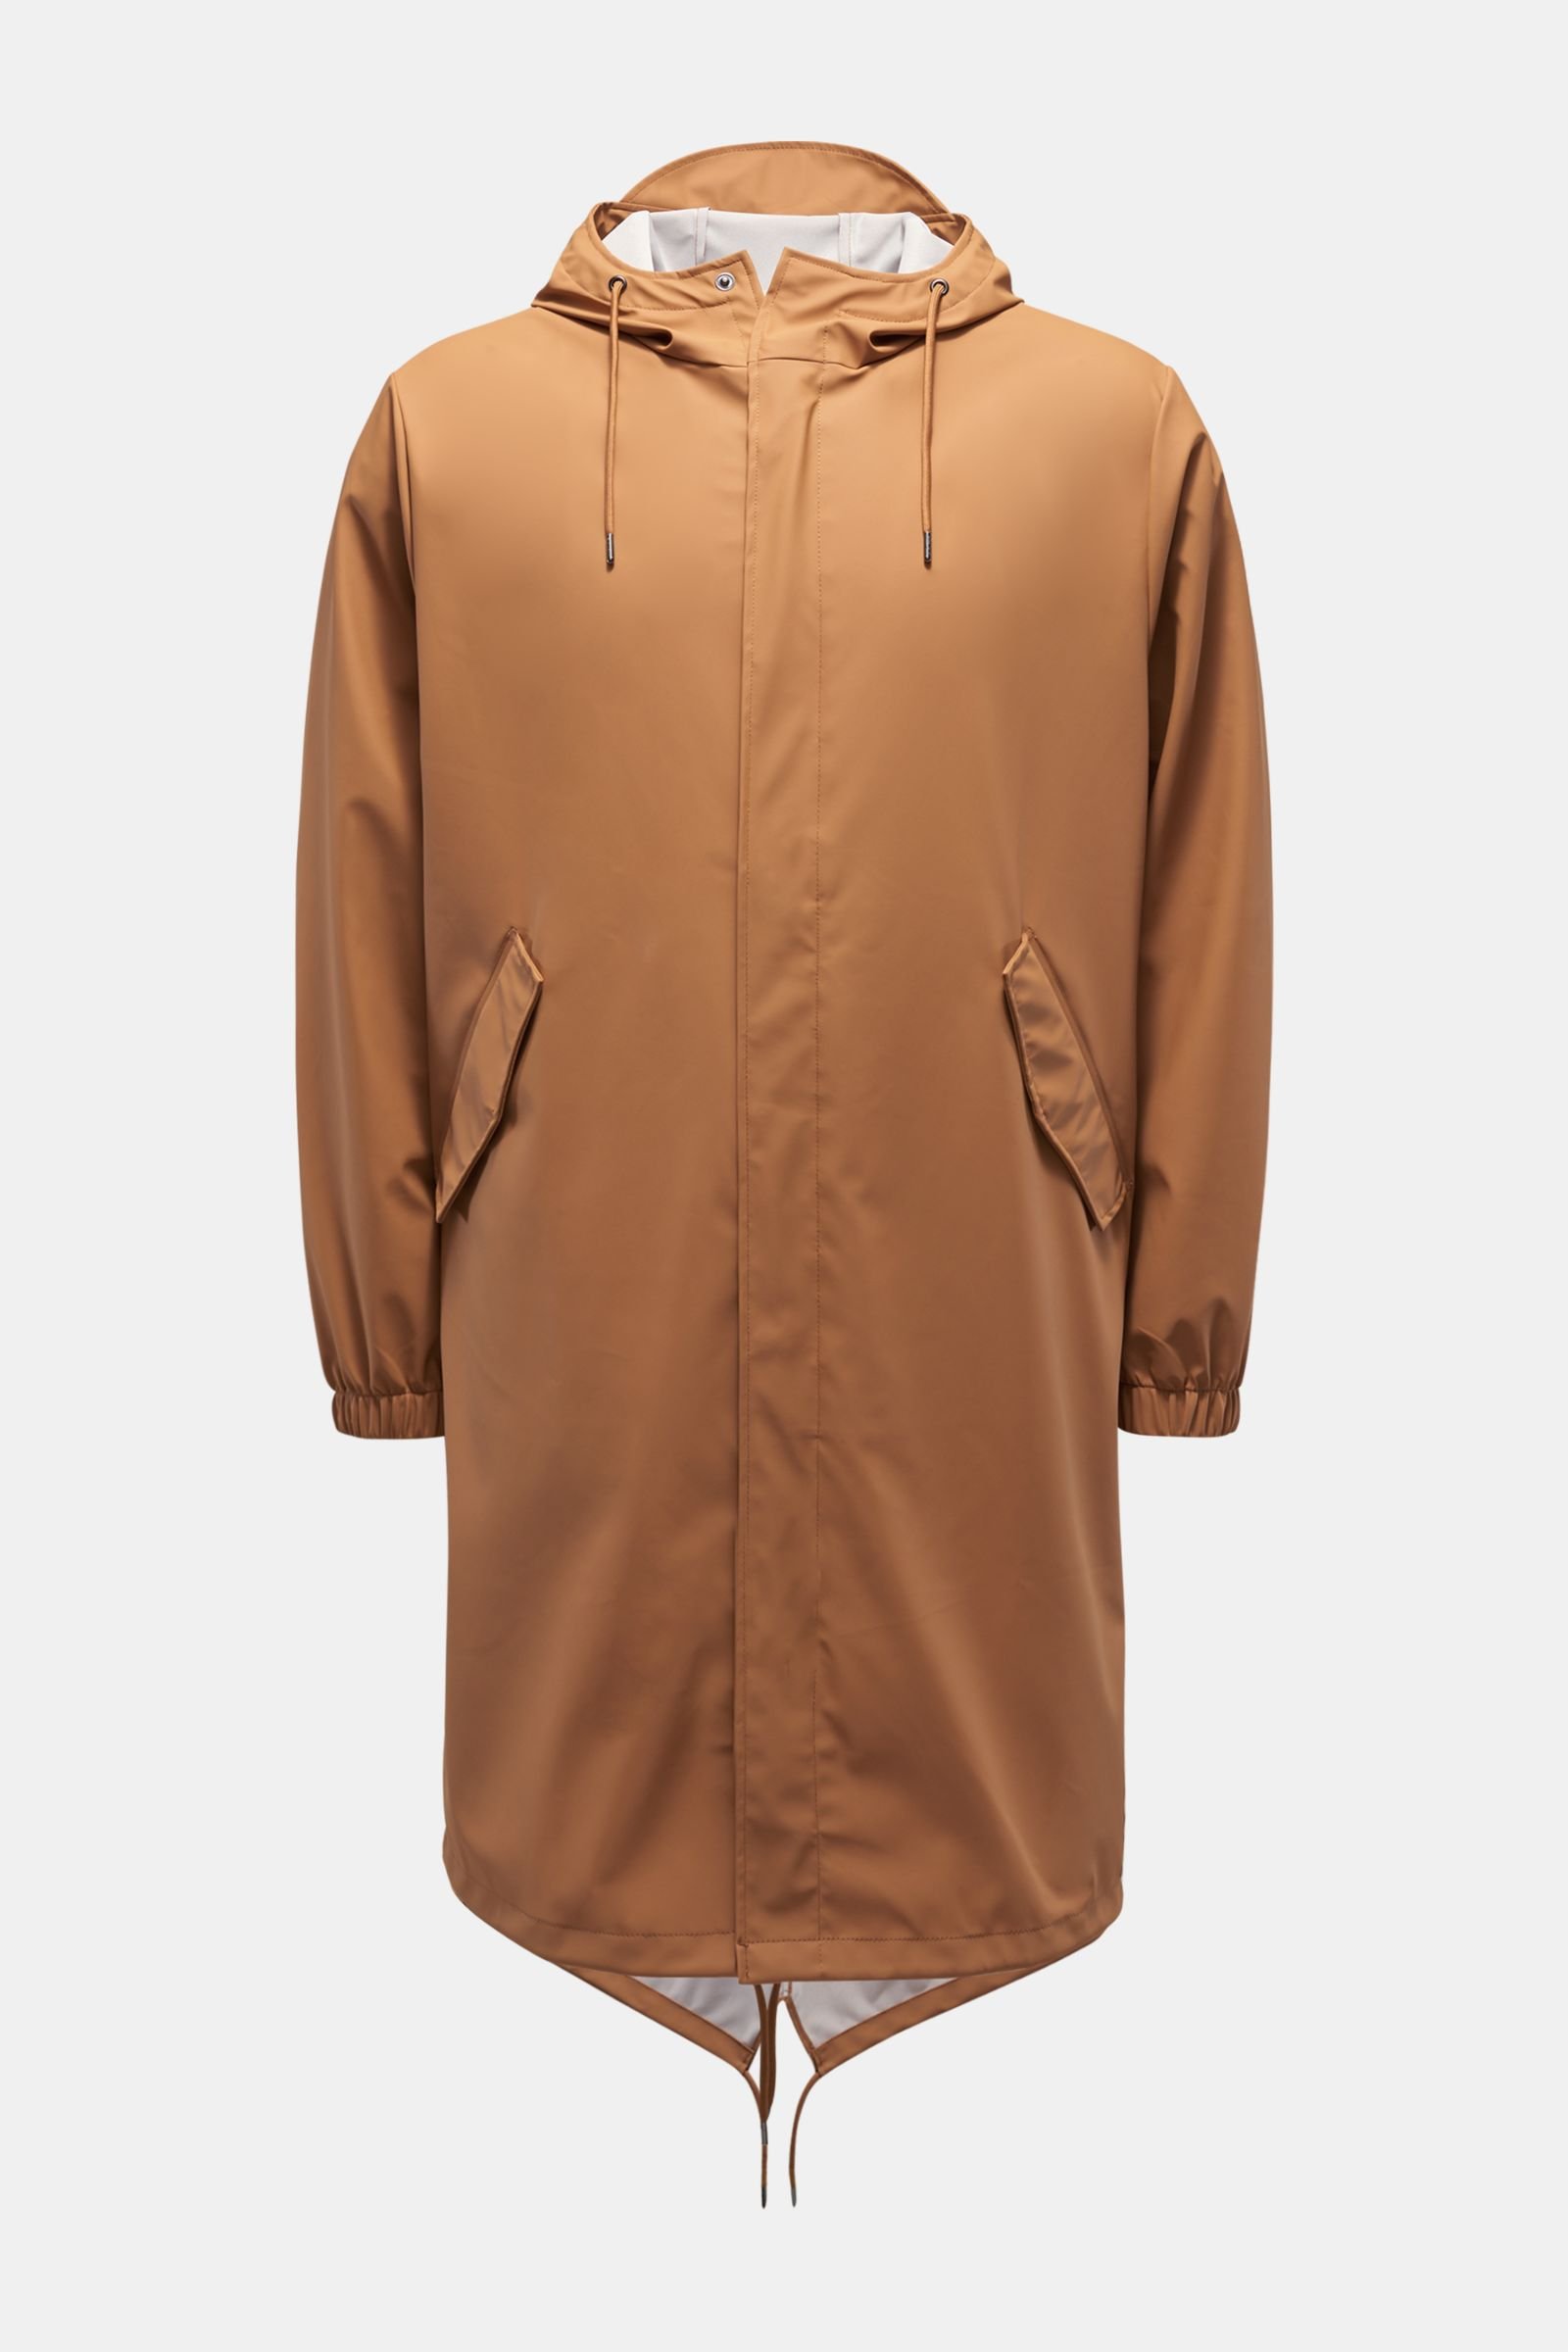 Rain coat 'Fishtail Parka' light brown